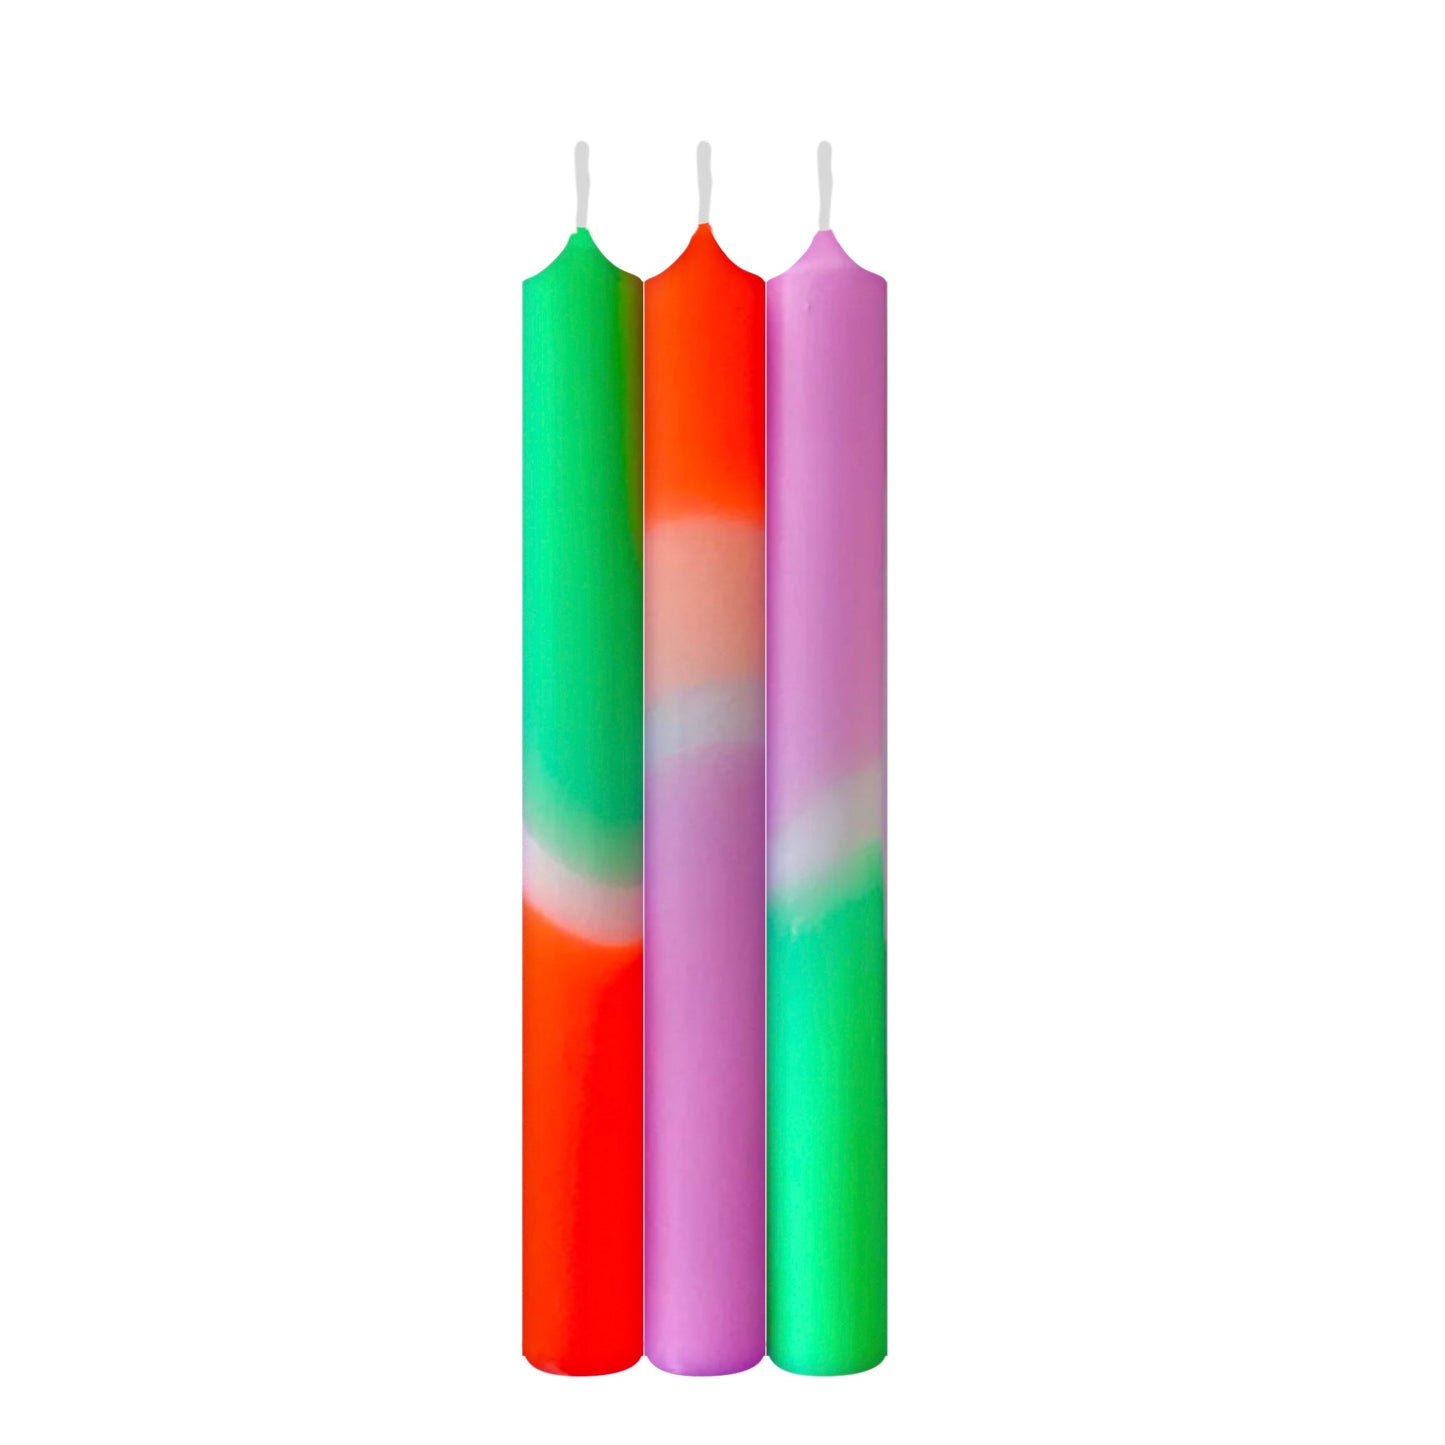 Set aus 3 Dip Dye Neon Kerzen - Surfing Bondi - Vandeley